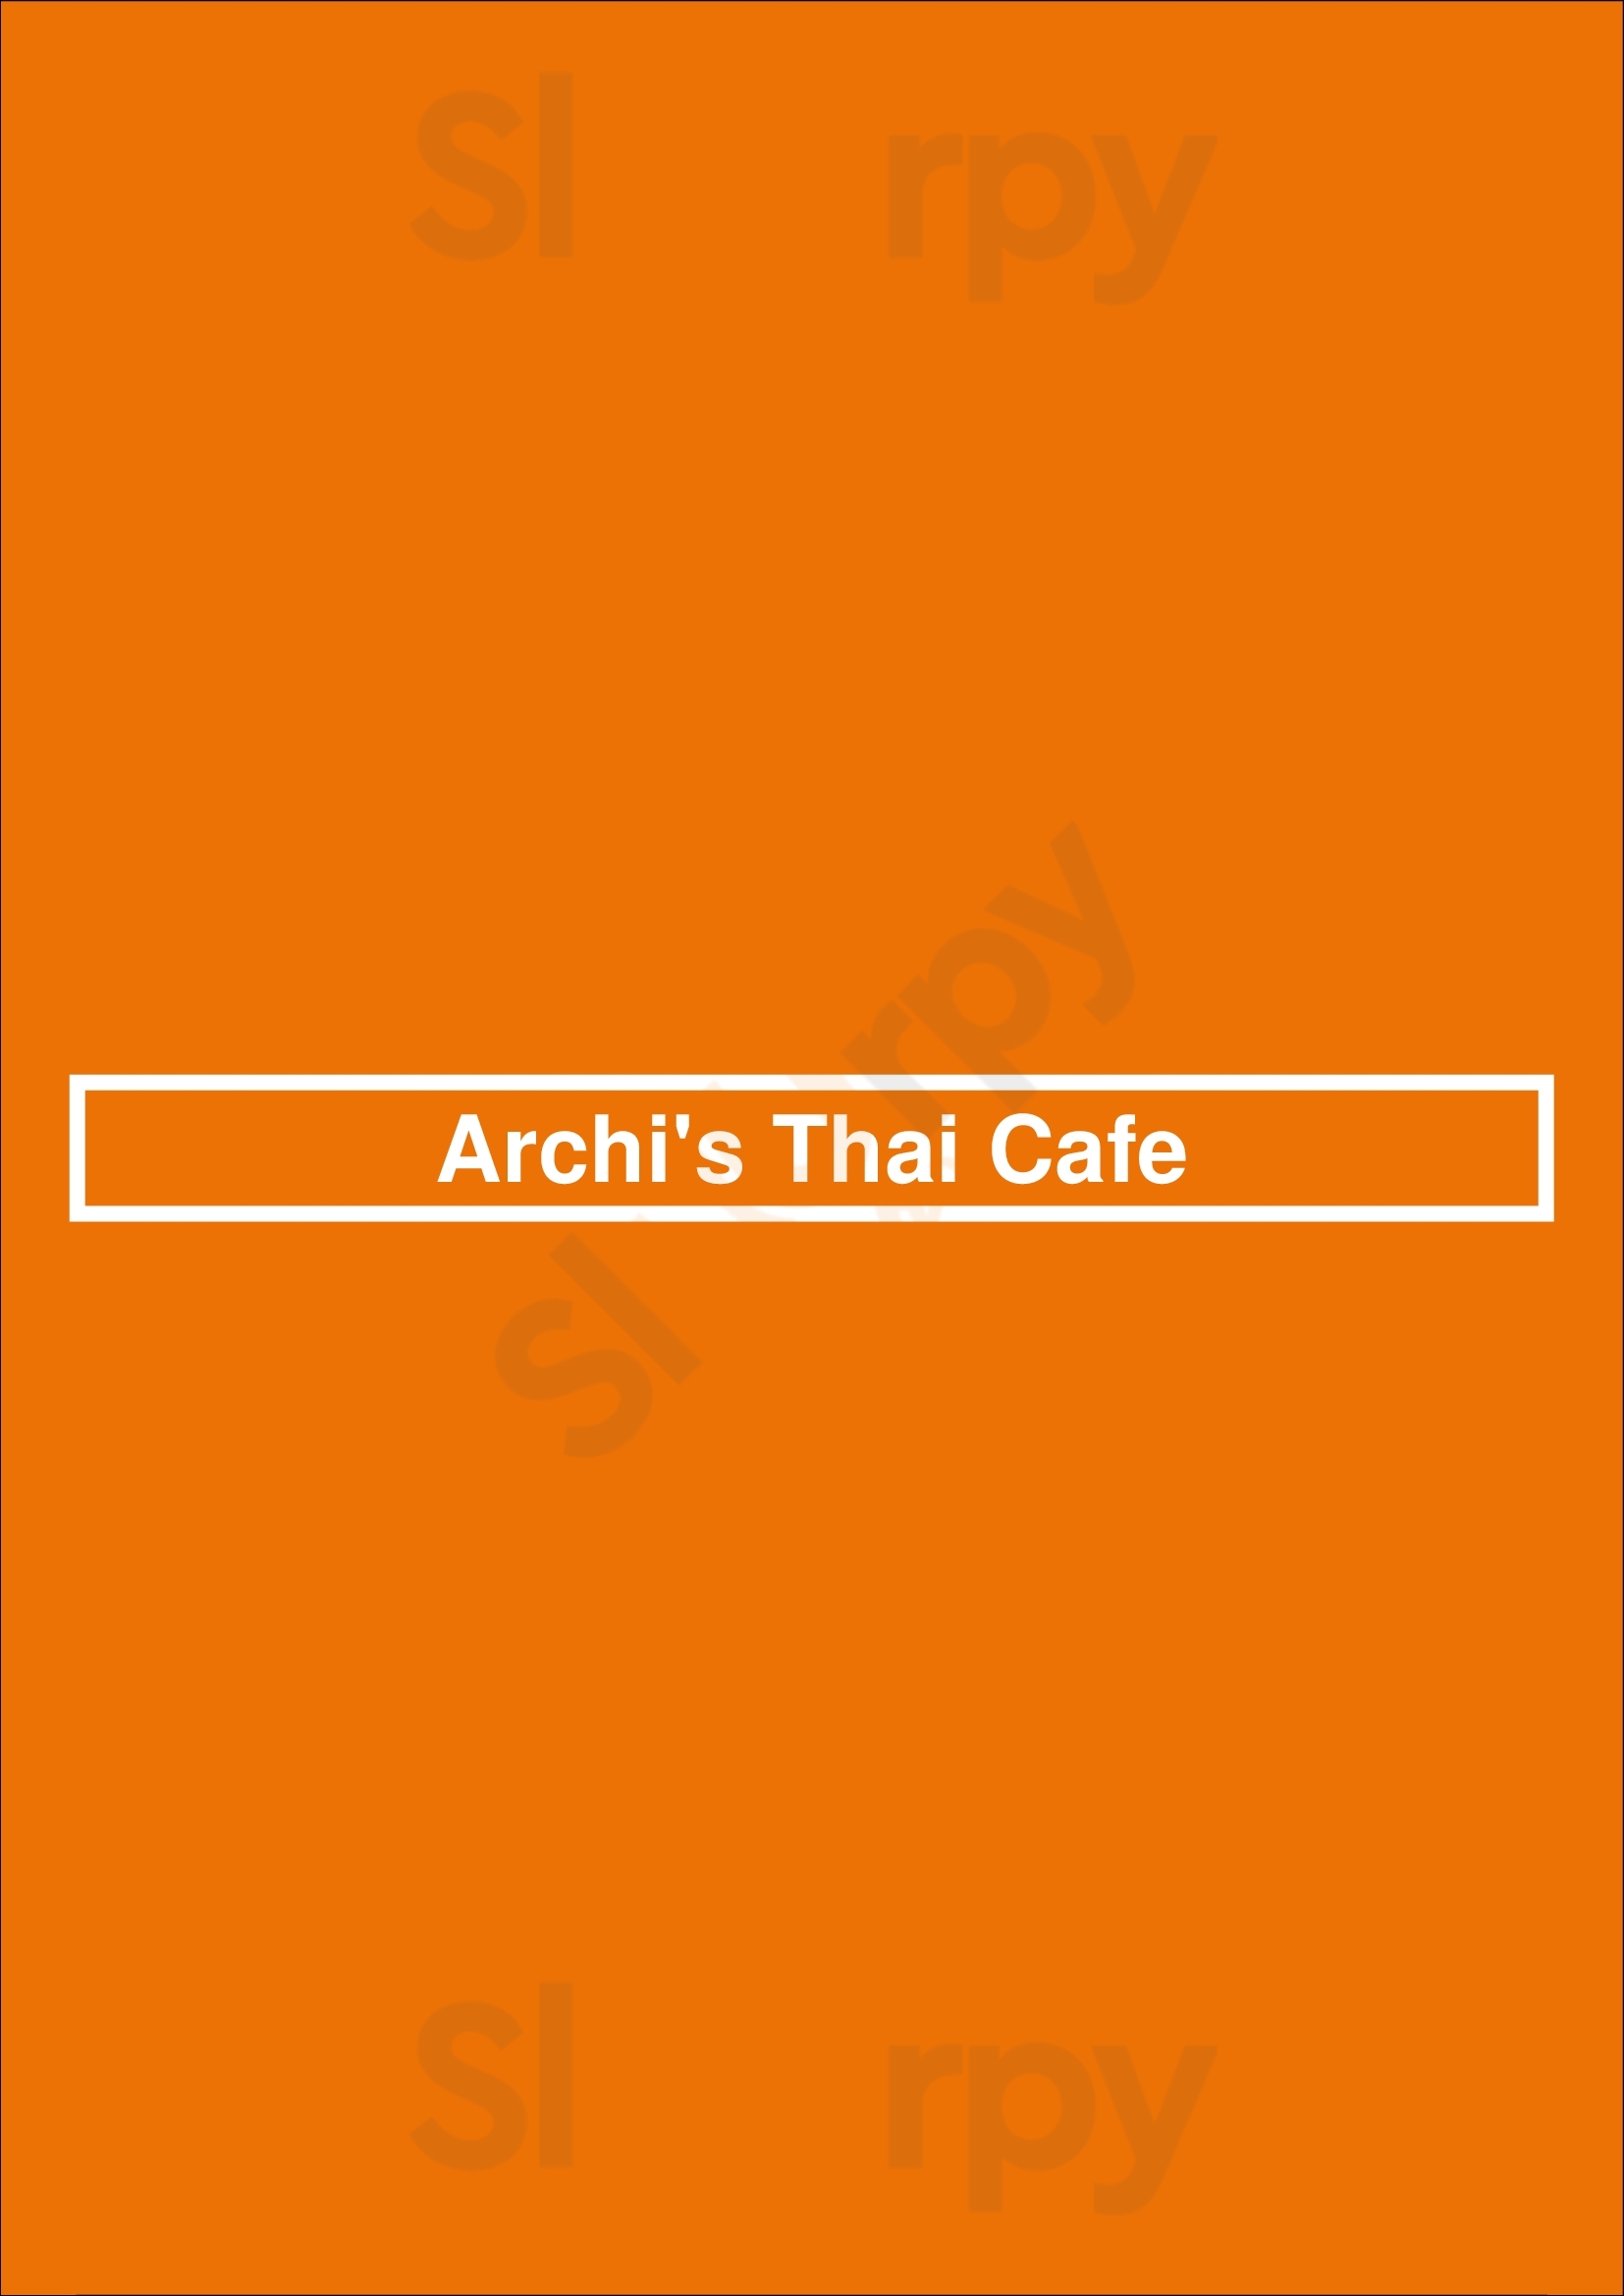 Archi's Thai Cafe Las Vegas Menu - 1